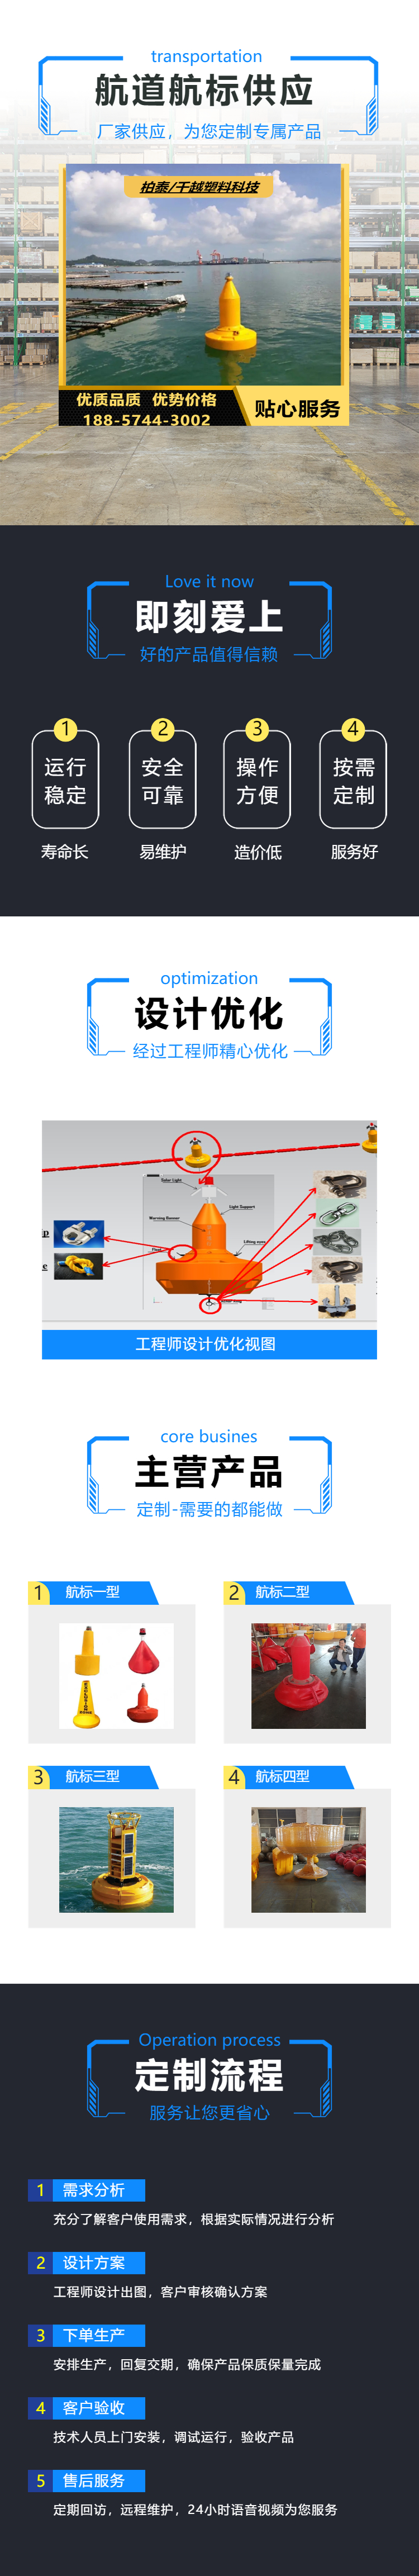 Customization of polyethylene navigation buoys for offshore mooring buoy channel warning buoys